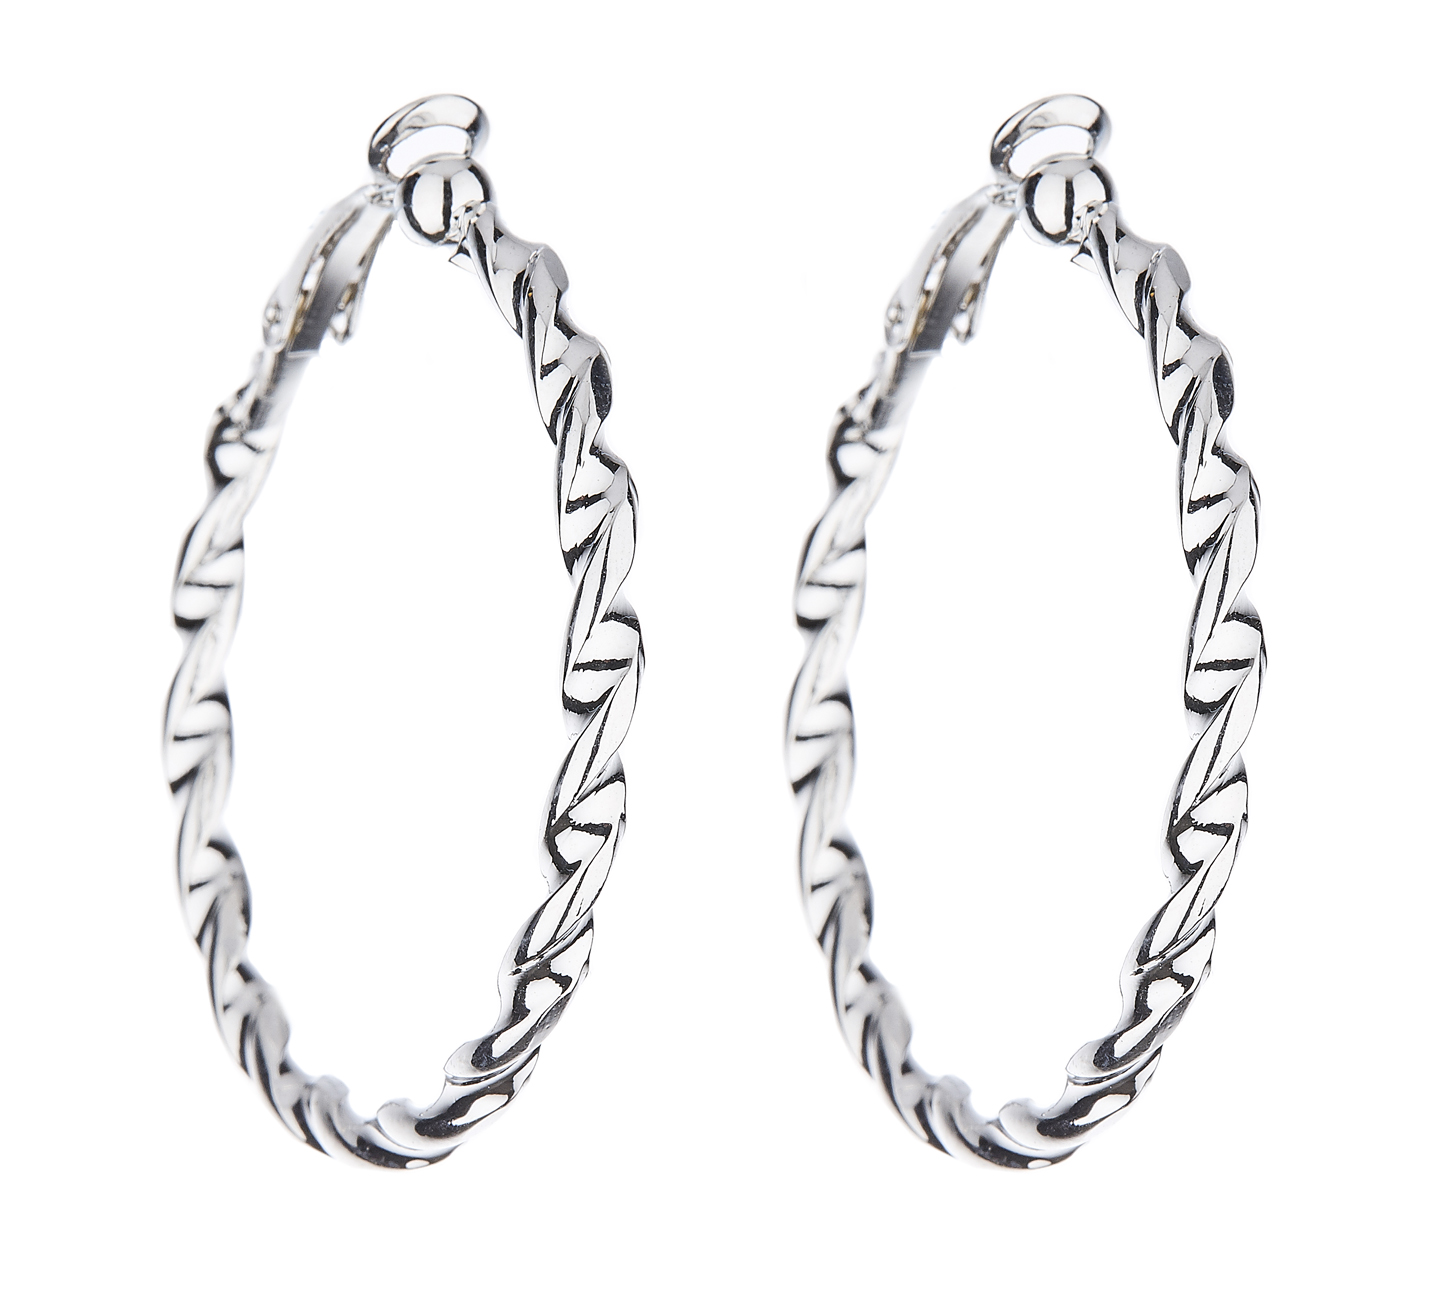 Clip On Earrings - Dawn S - silver hoop earring in a twisted rope design